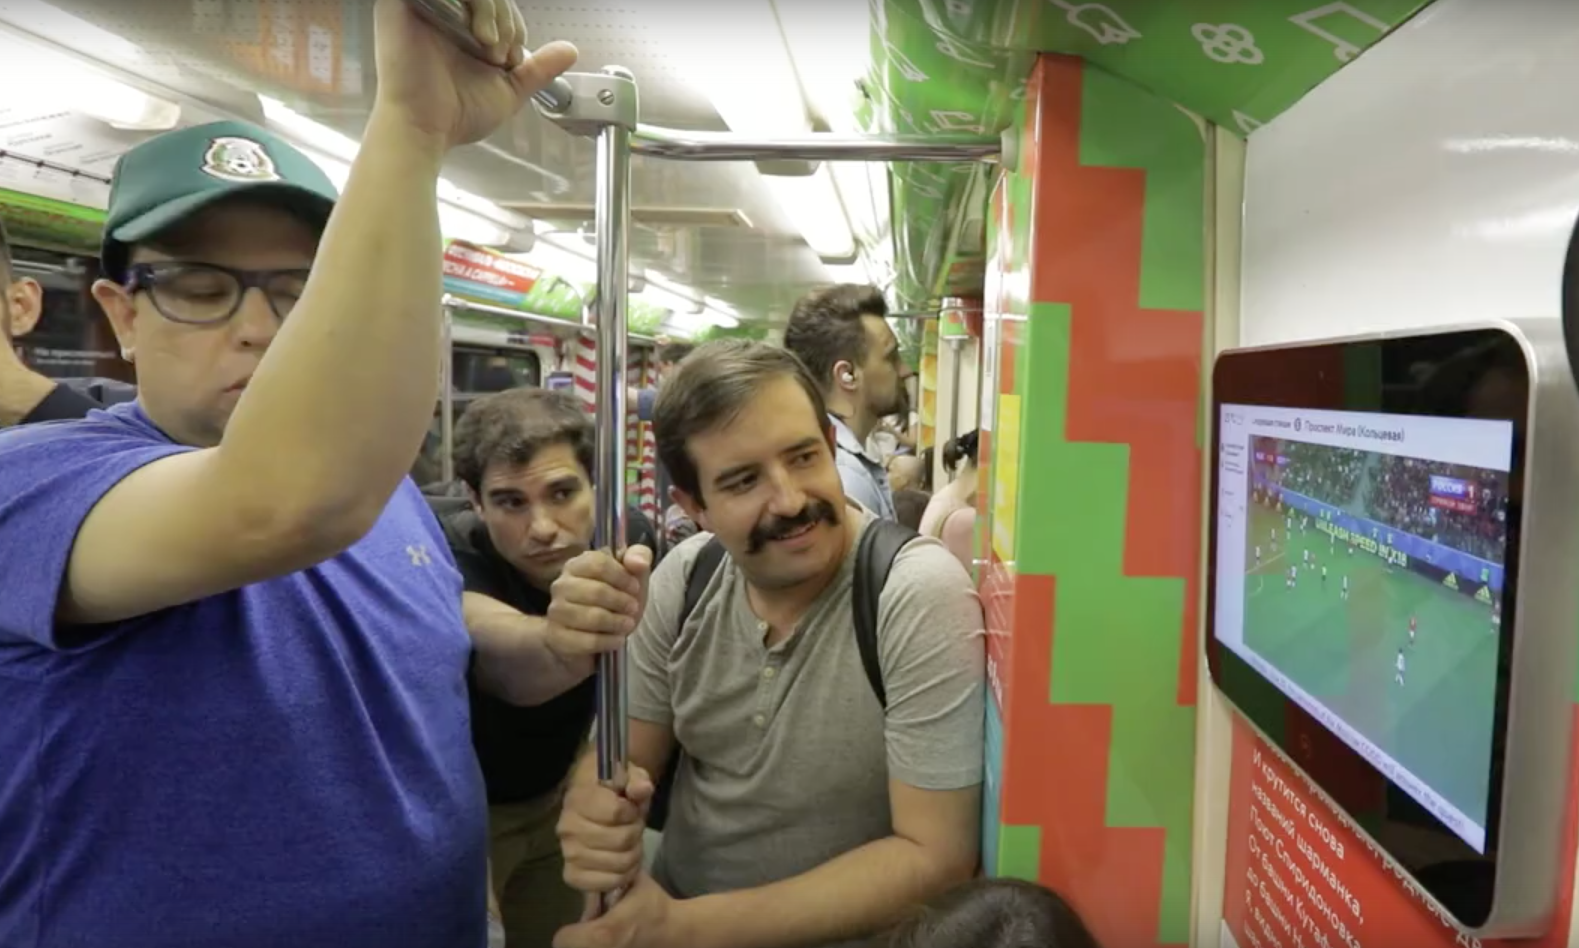 Фото: &copy; скриншот видео "ЧМ 2018 на экранах в метро", ВКонтакте /&nbsp;Московское метро